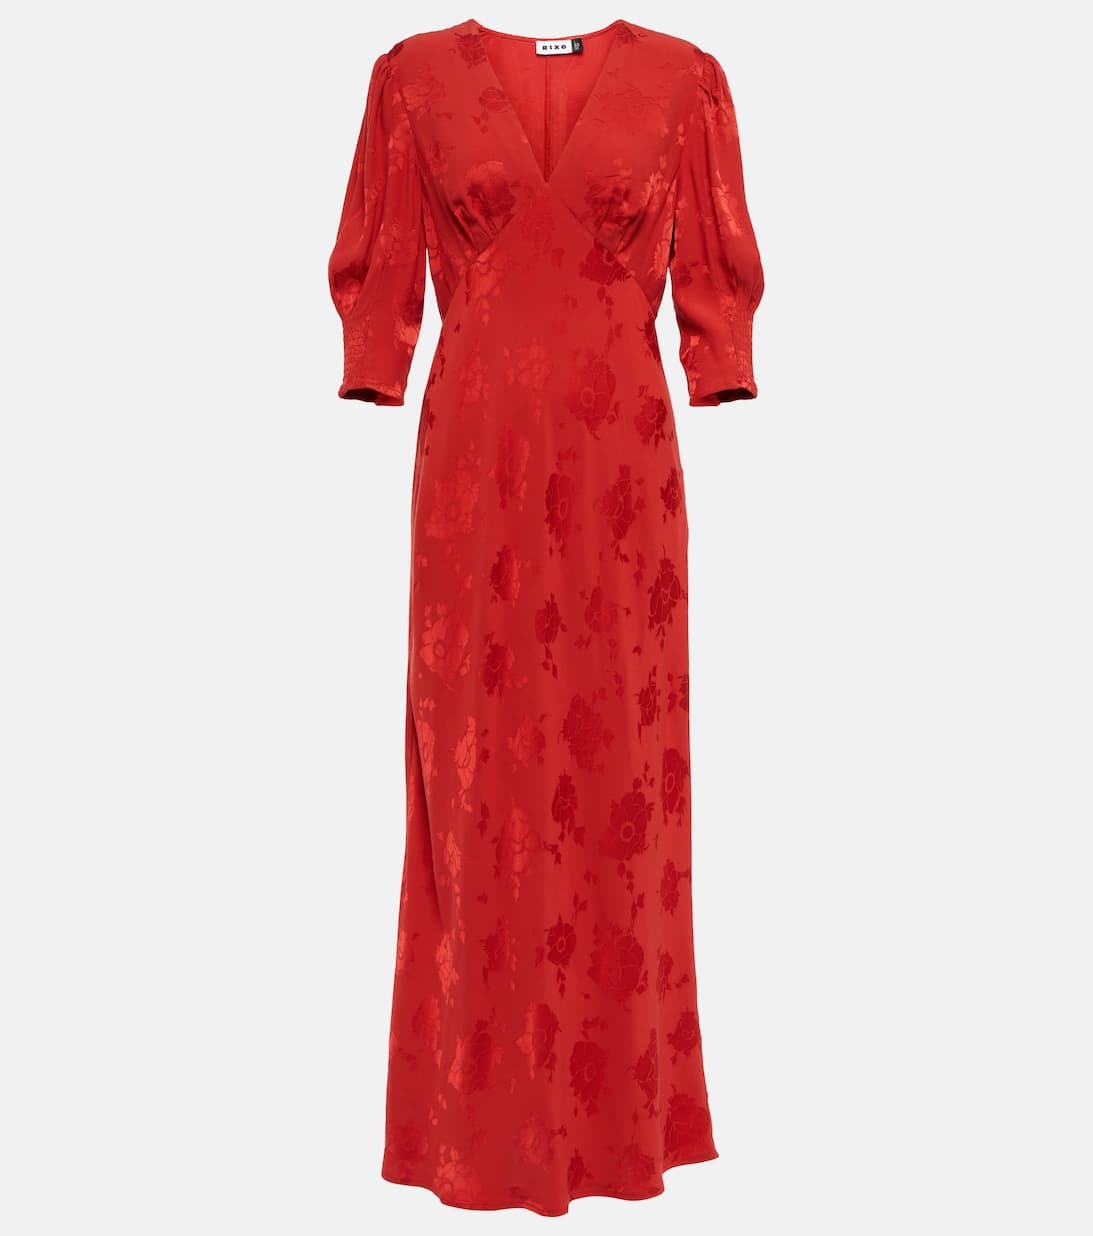 Vestido rojo de jacquard de flores de Rixo (335 euros).